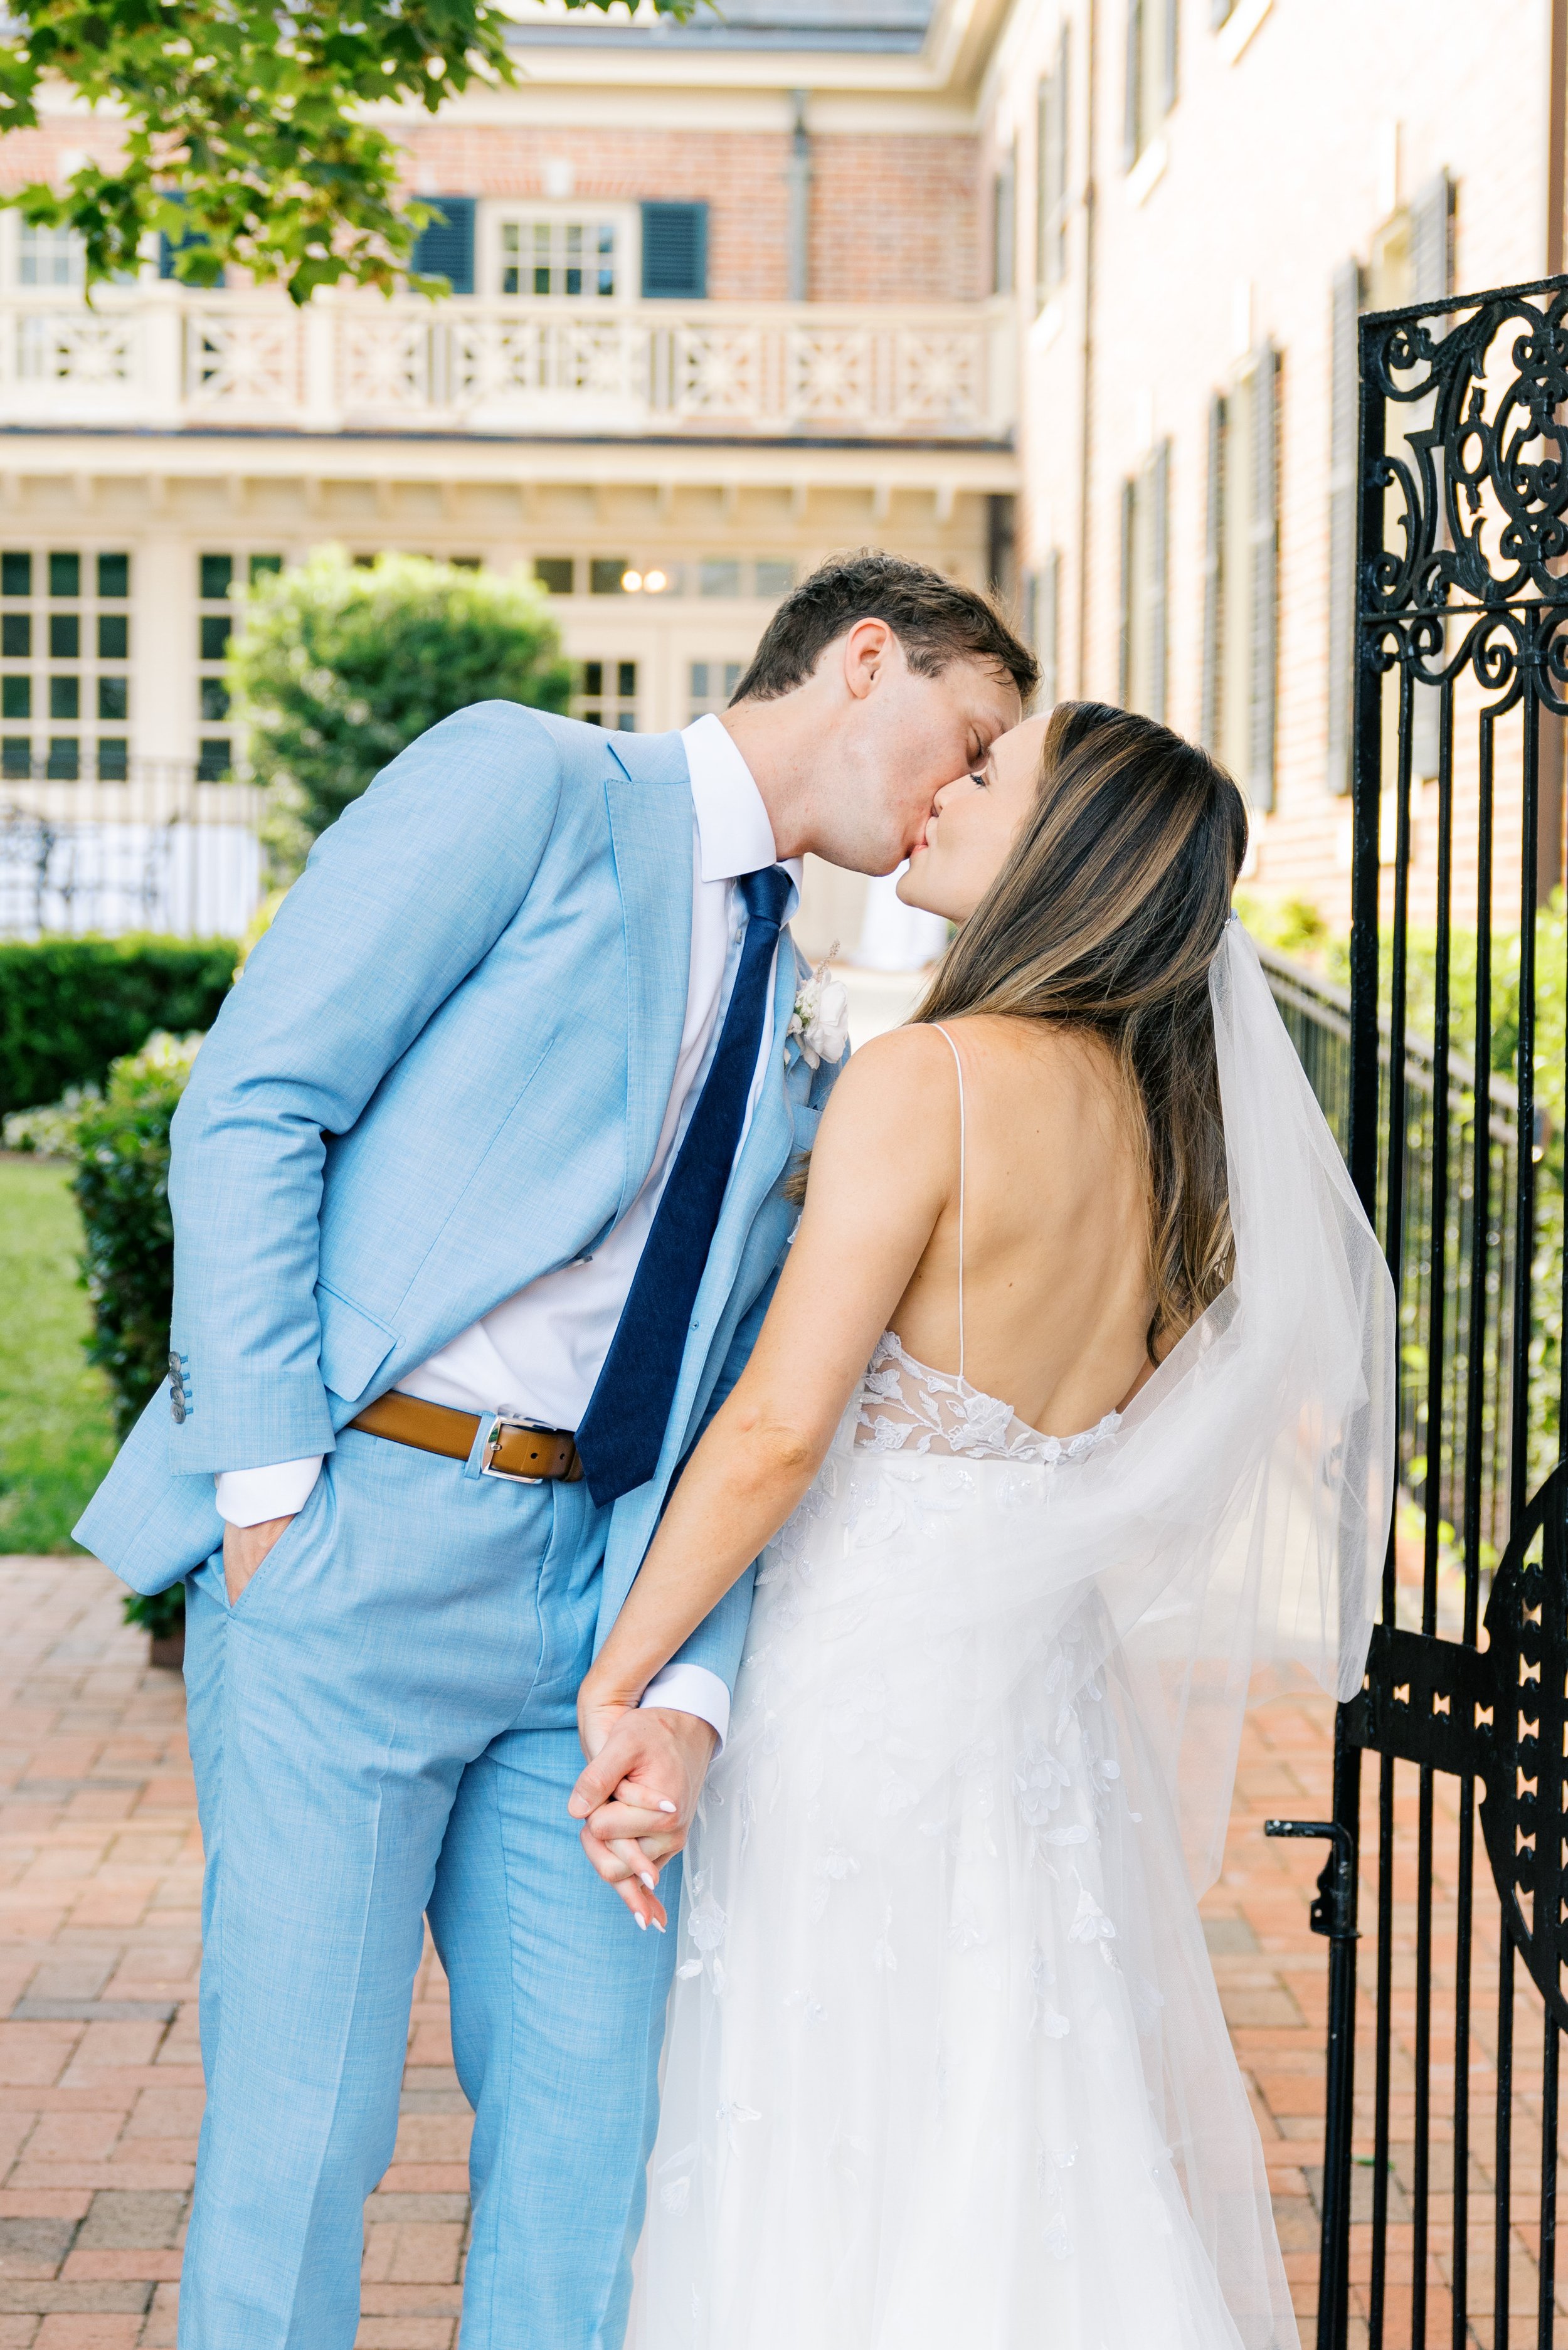 Gate Kiss Bride and Groom Jewish Wedding at The Carolina Inn Chapel Hill North Carolina Fancy This Photography